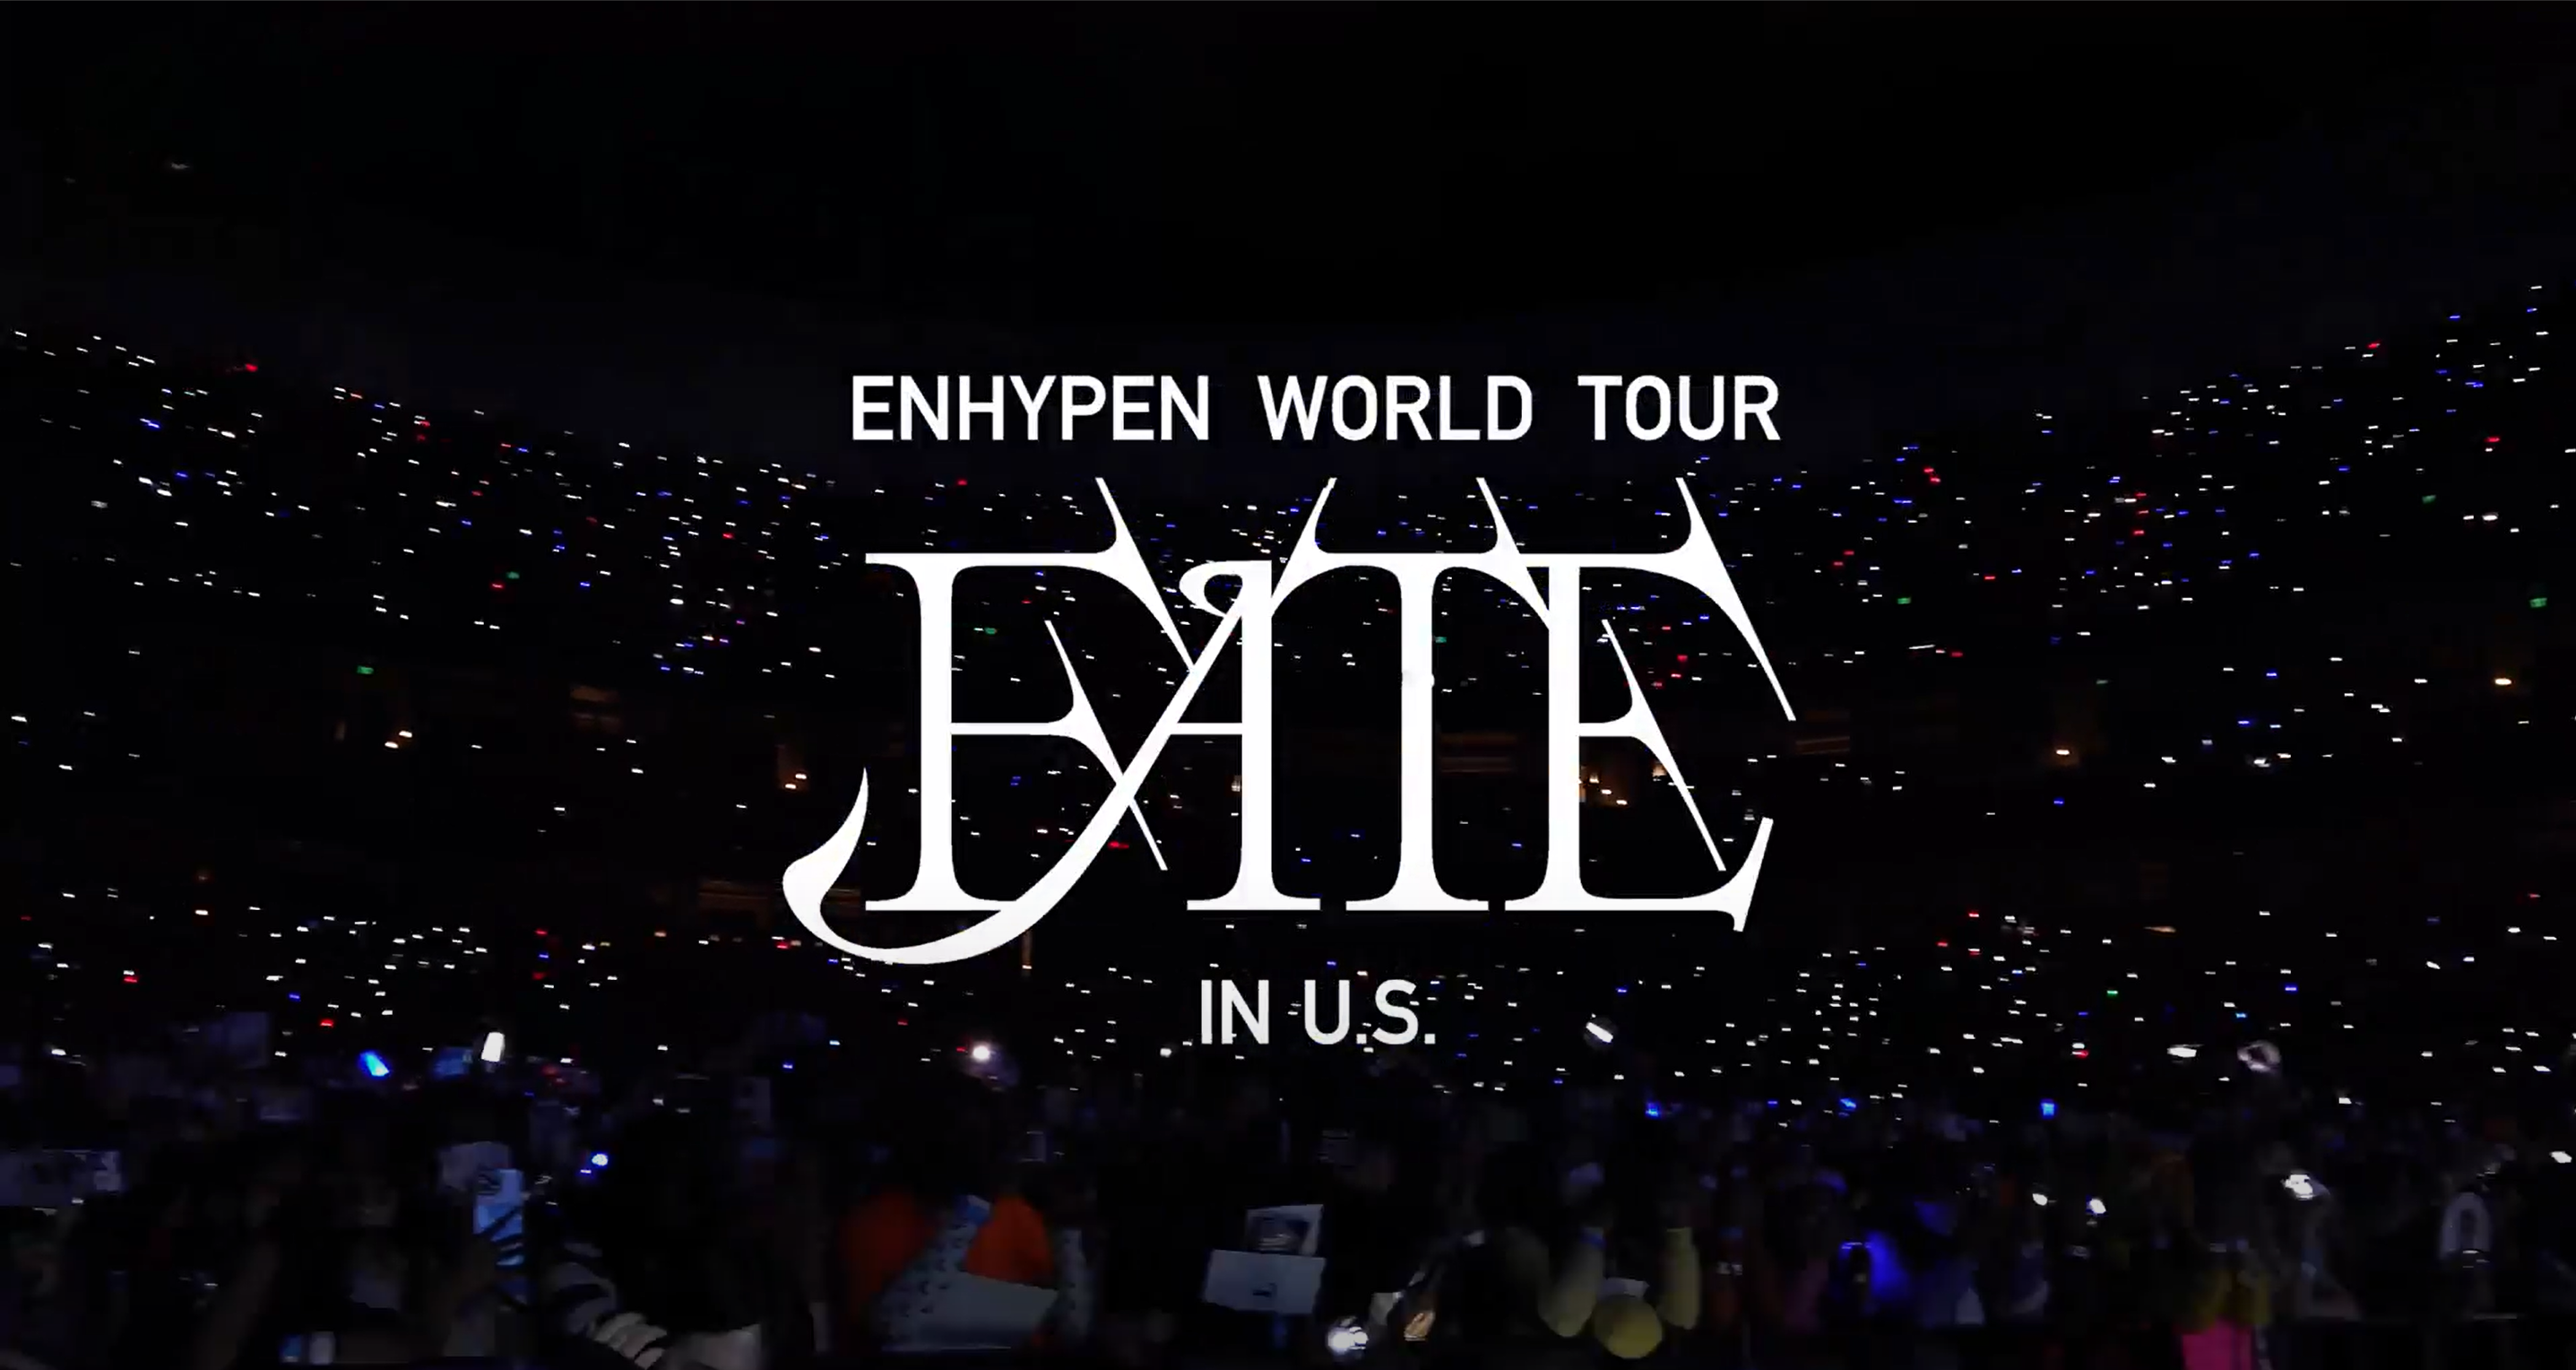 ENHYPEN WORLD TOUR 'FATE' IN U.S. SPOT